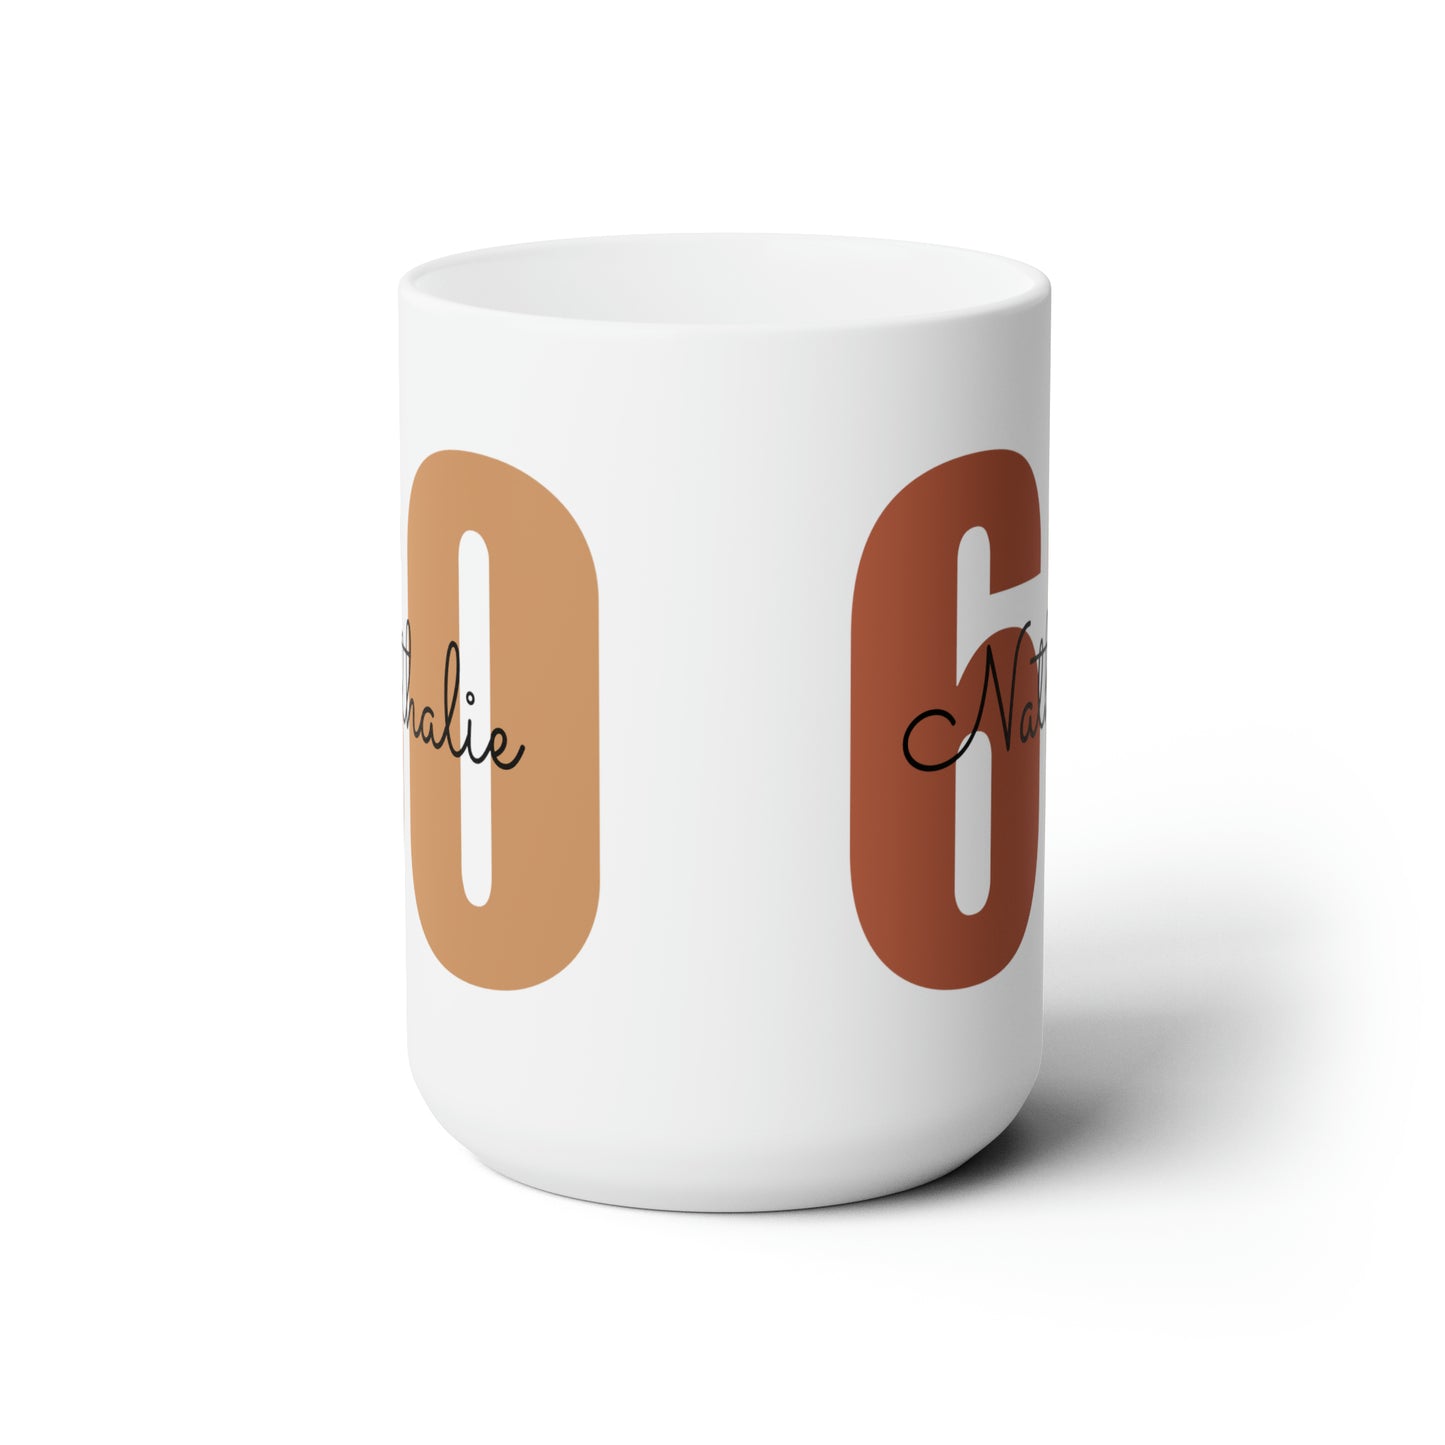 60th Birthday Personalized Ceramic Mug 15oz, White